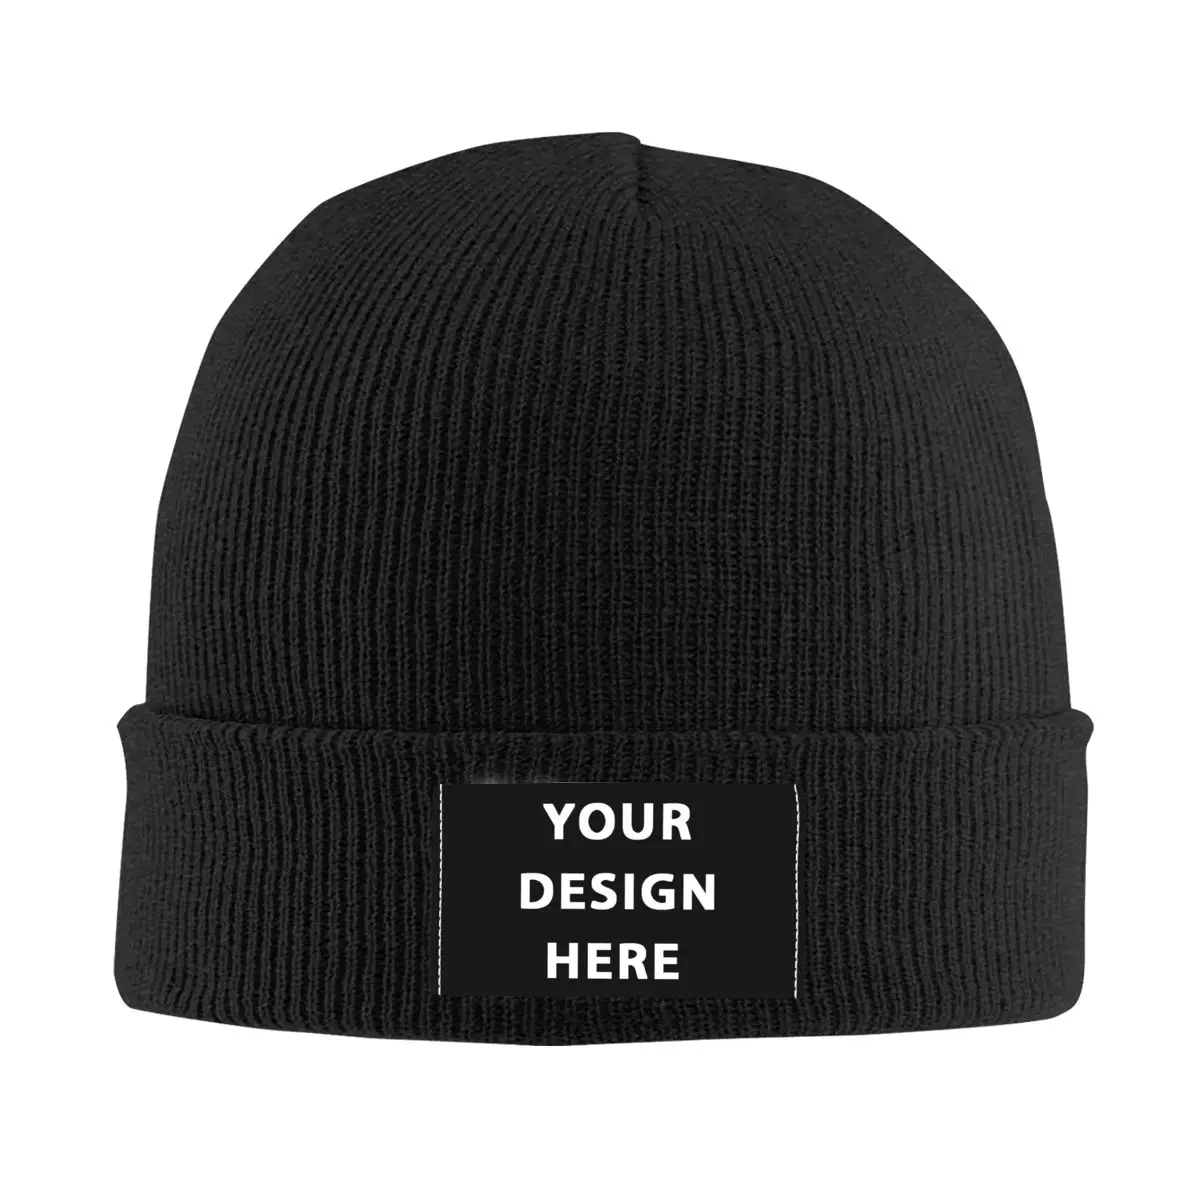 Your Design Here Bonnet Hats Hip Hop Knit Hat Autumn Winter Warm Custom Customize Logo Letter Print Skullies Beanies Caps 1